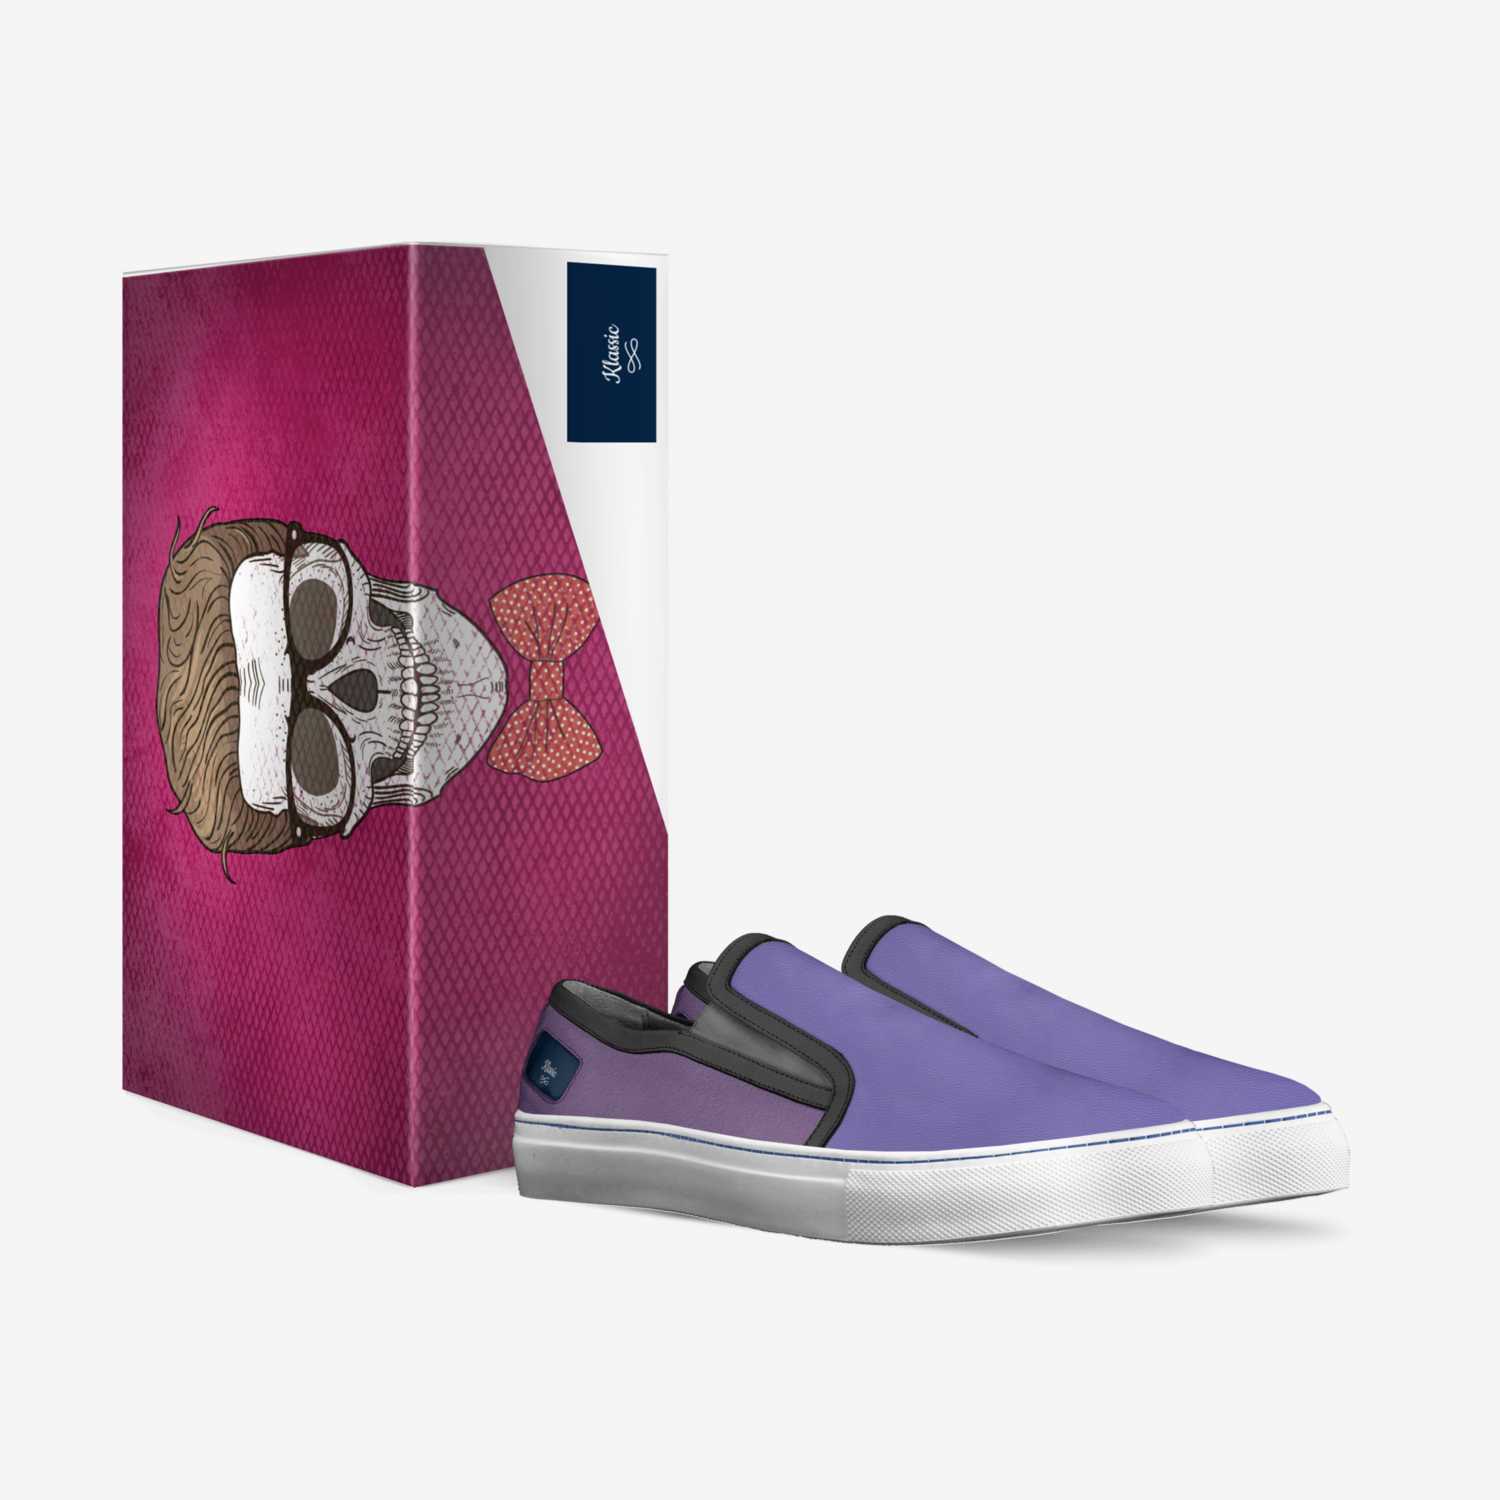 Klassic custom made in Italy shoes by Klarissa Smith | Box view